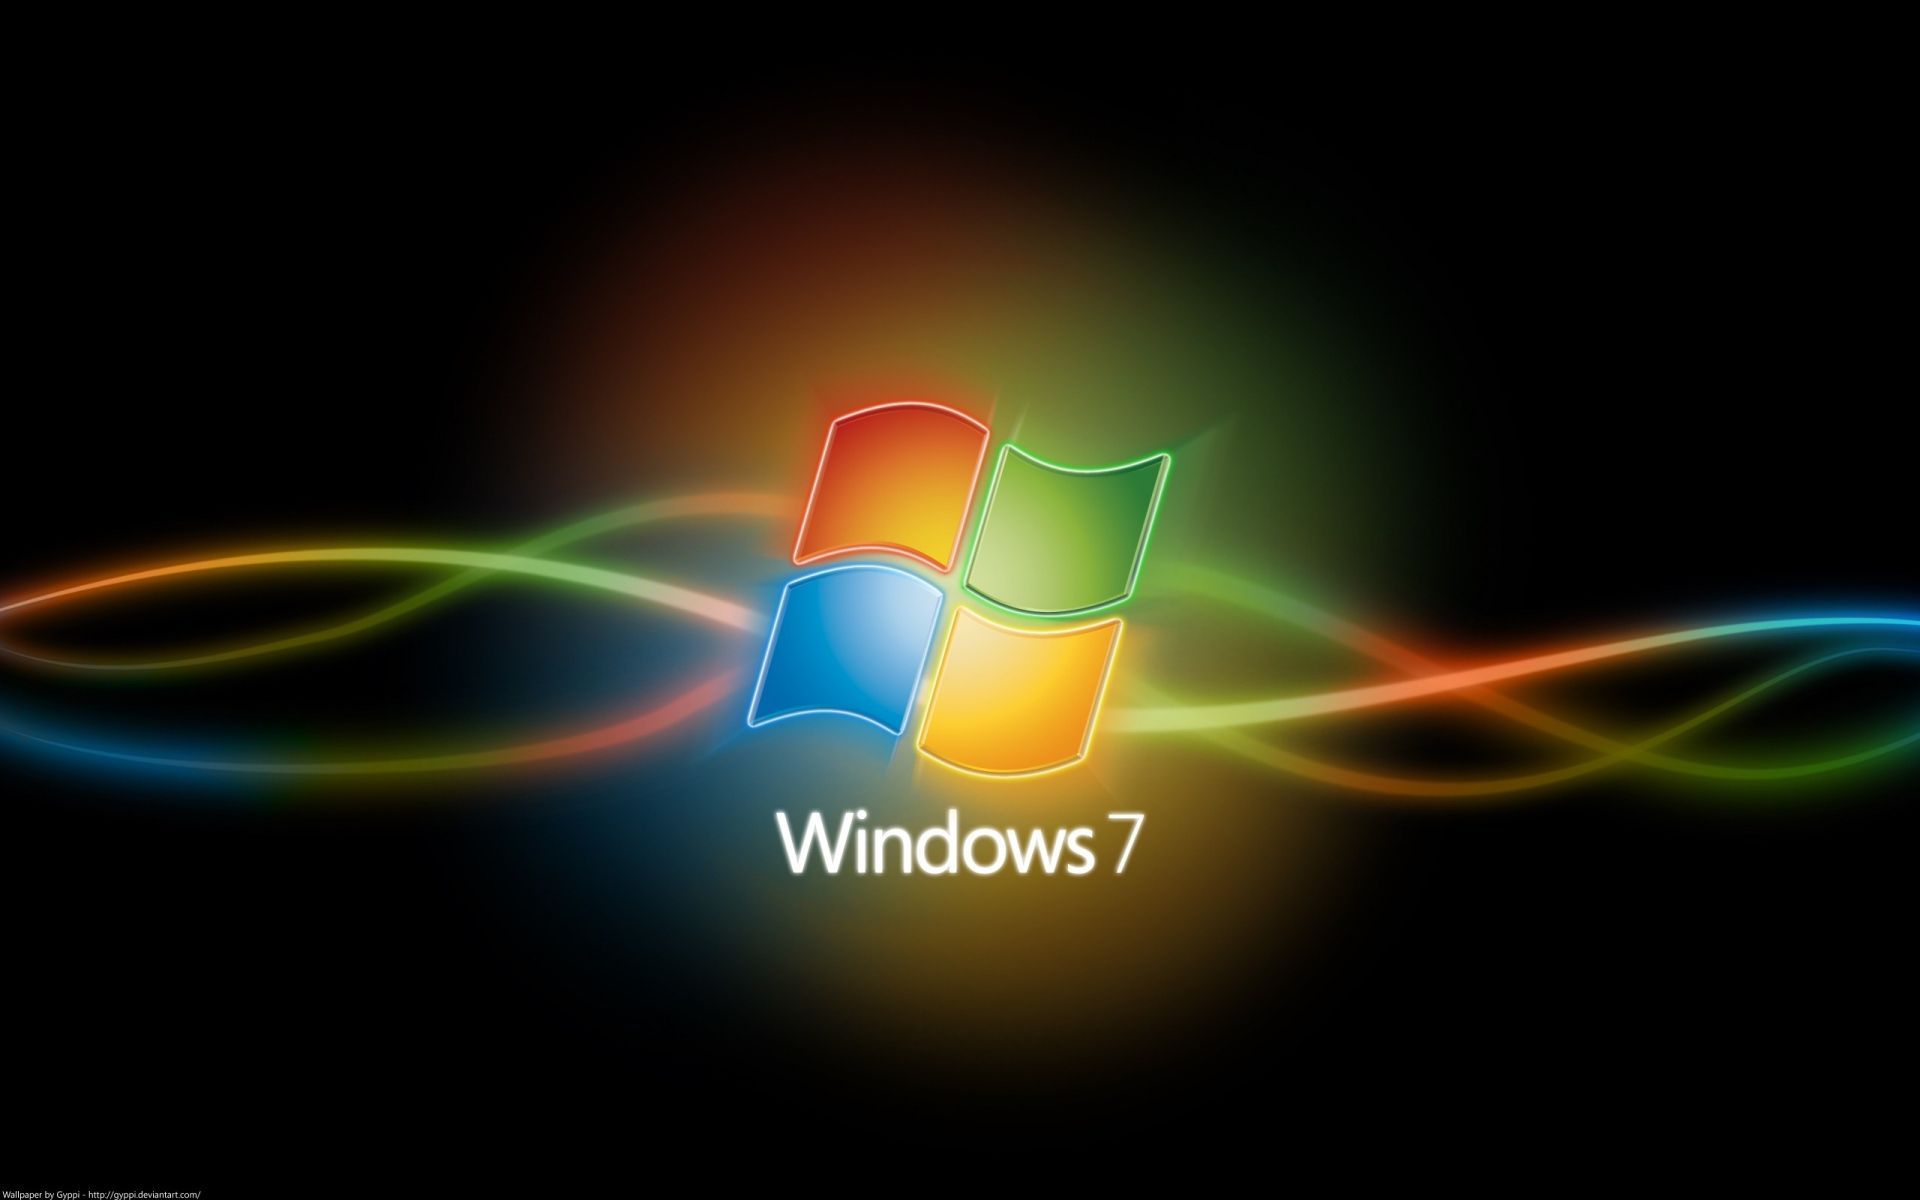 Windows 7 with logo